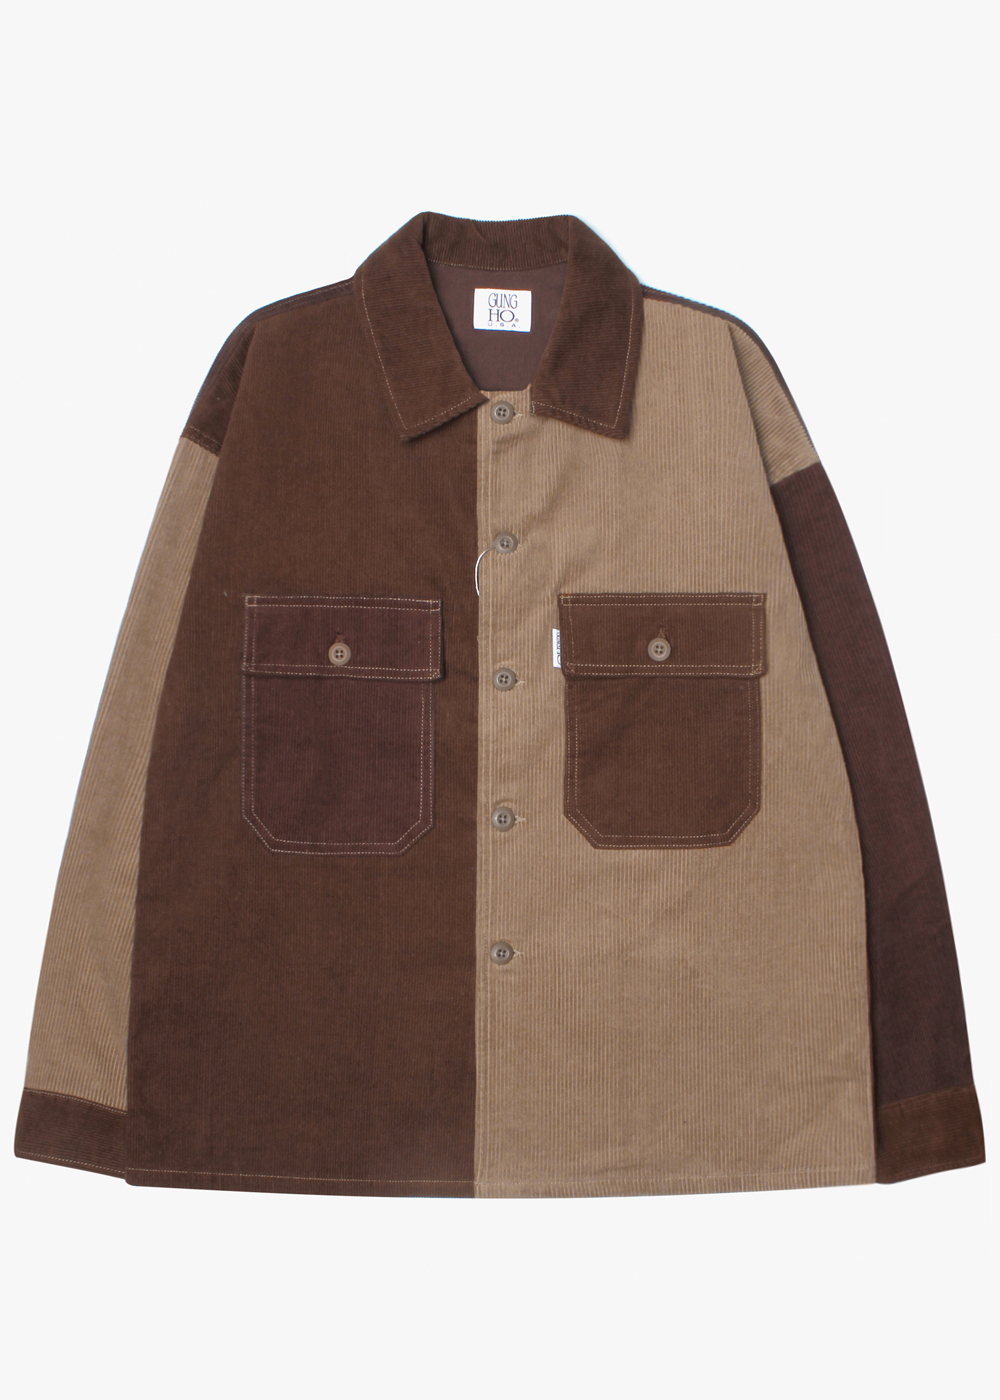 GUNG HO’over fit’ patchwork corduroy jacket